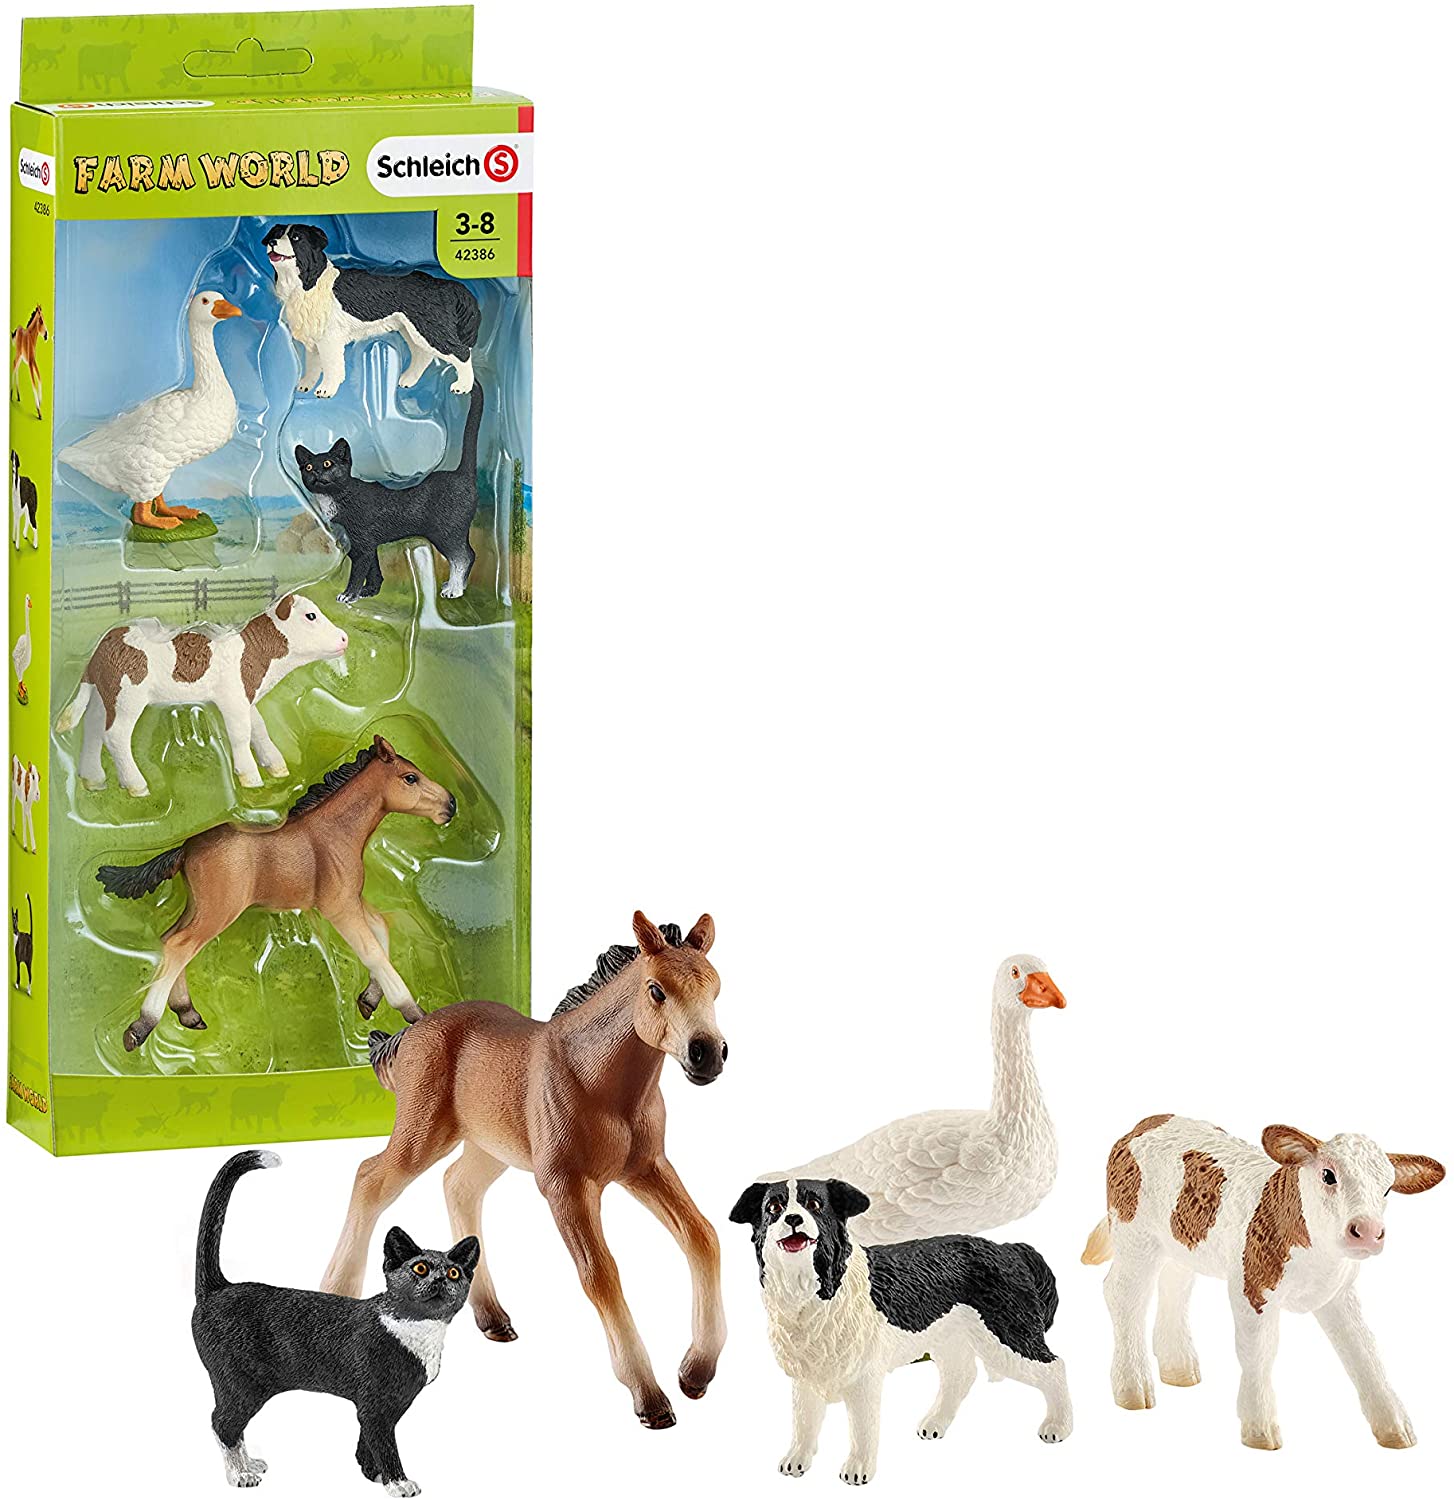 Schleich 42386 Farm World Animal Mix Toy, Single